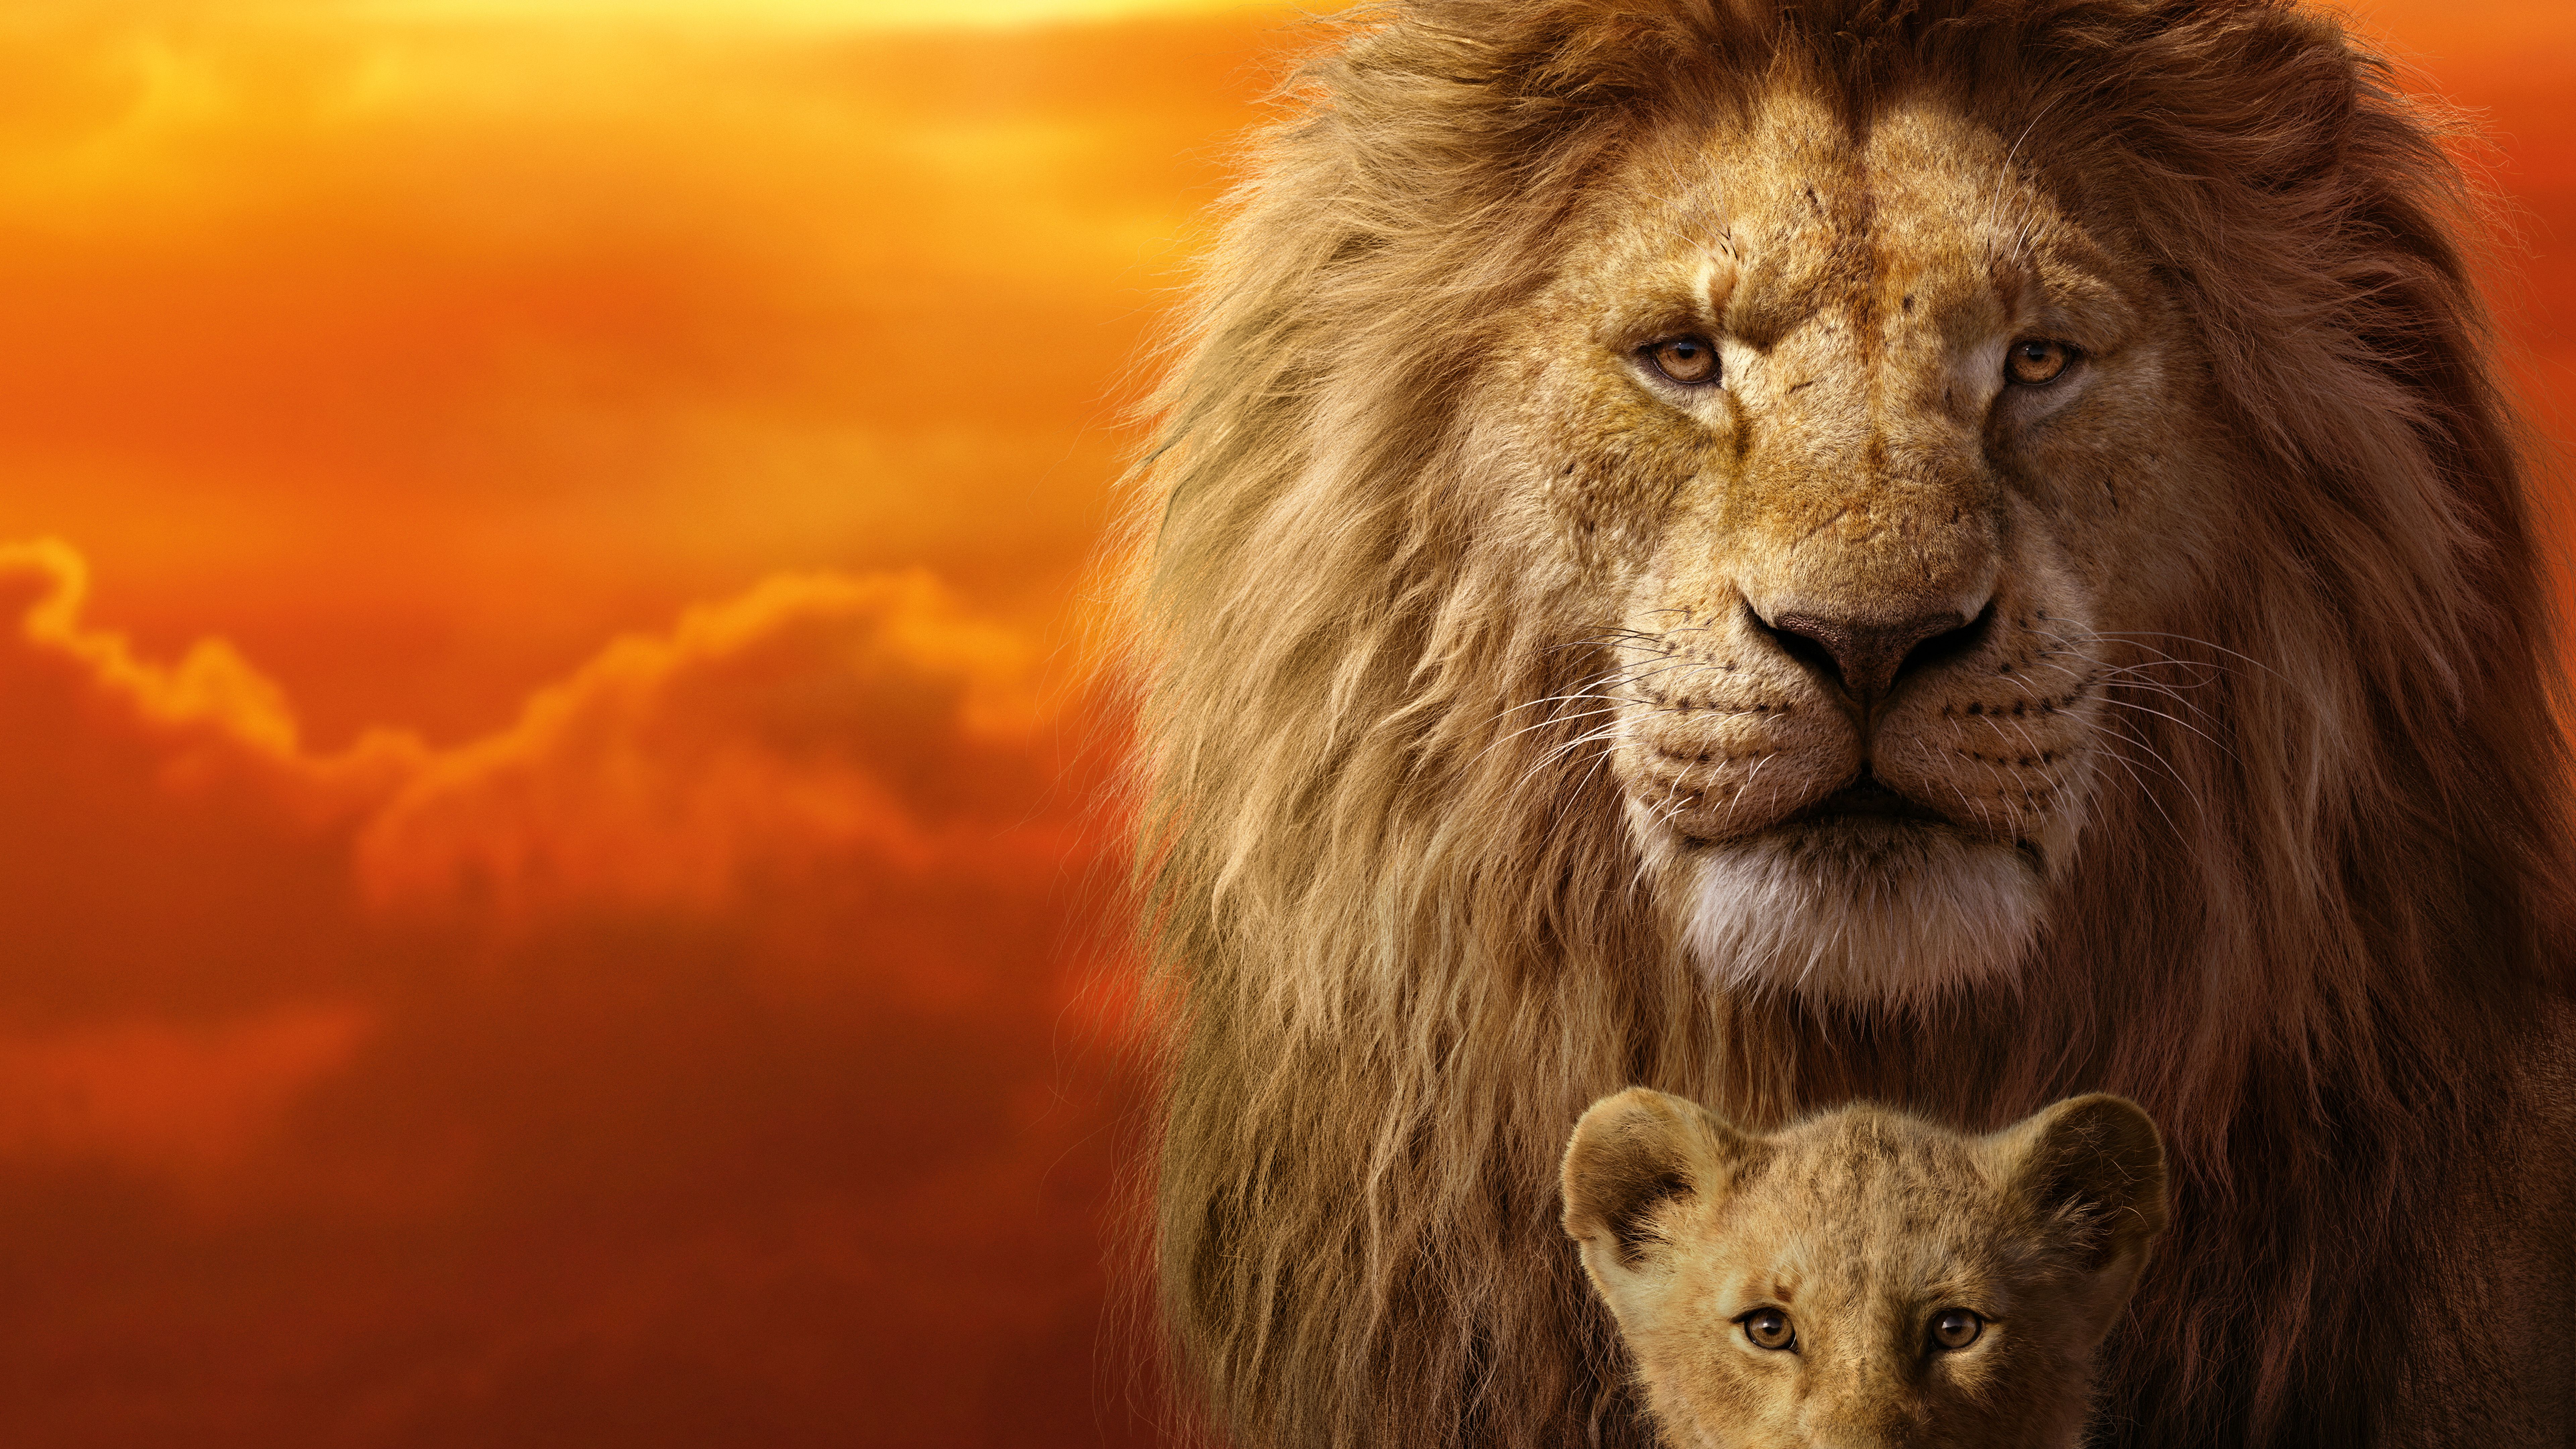 The Lion King Mufasa Simba 4k 8k Wallpapers - Lion King 2019 Hd - 7680x4320  Wallpaper 